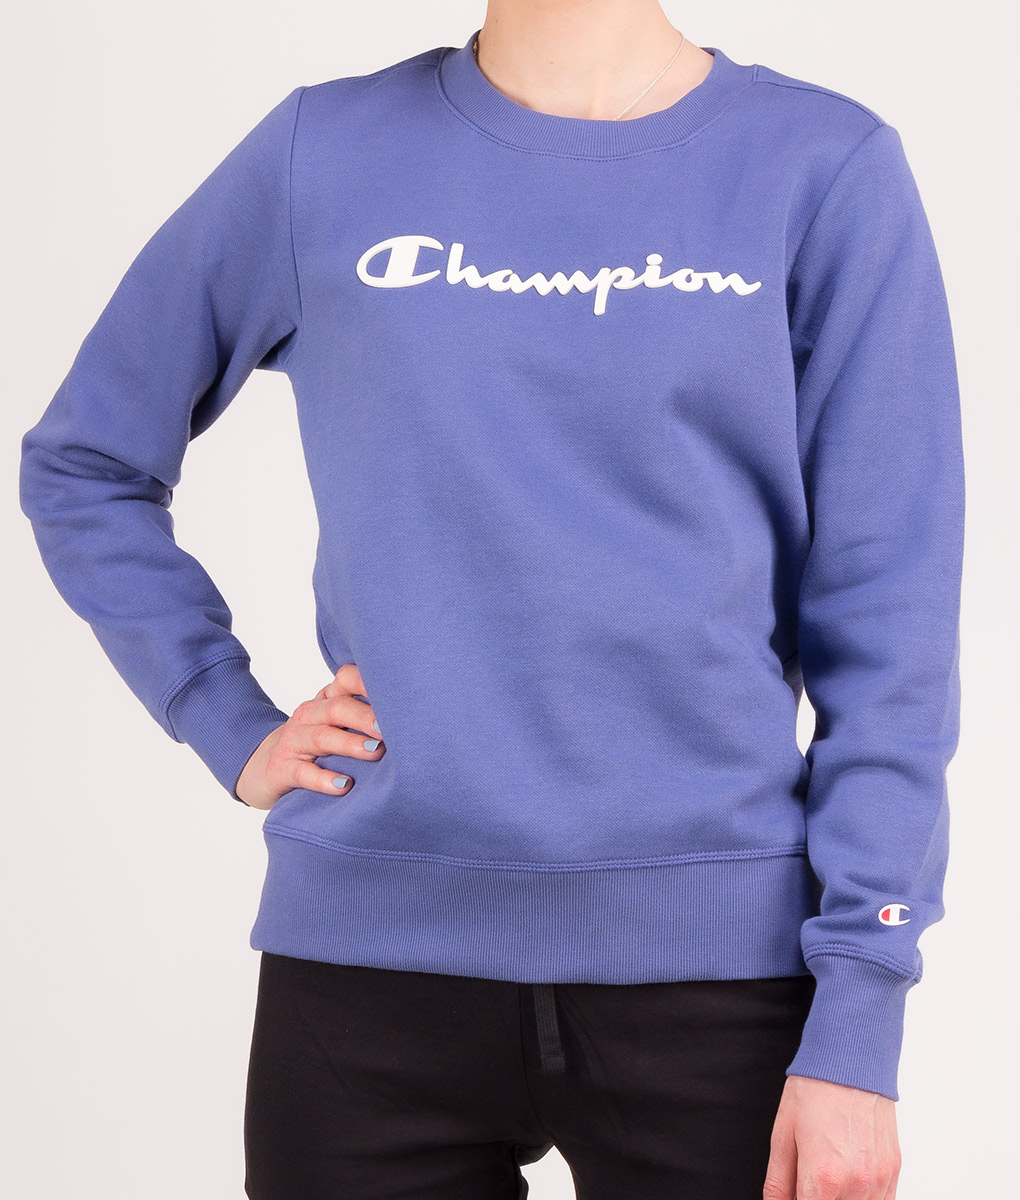 champion blue sweater women's